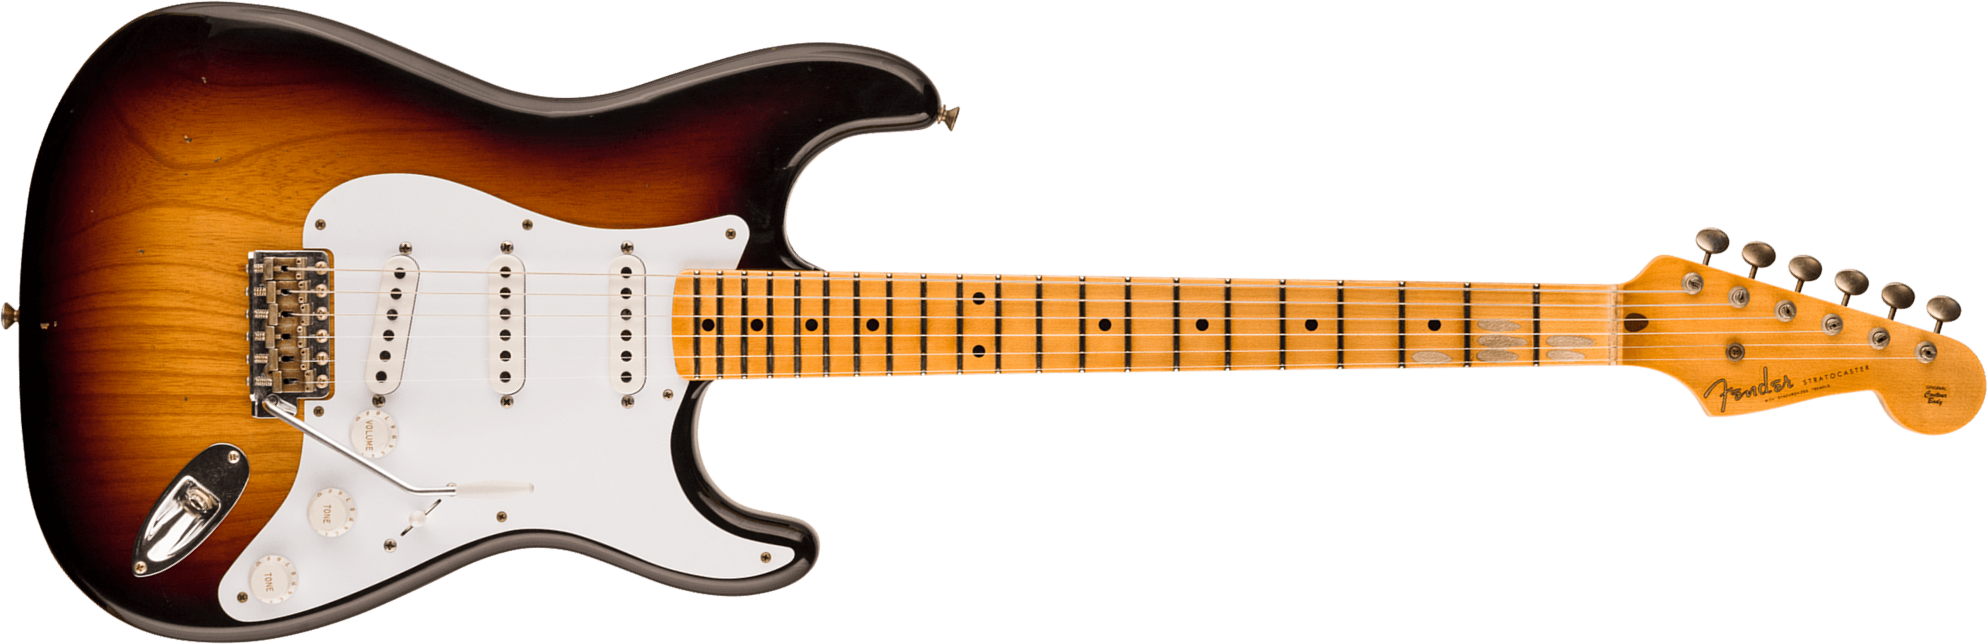 Fender Custom Shop Strat 1954 70th Anniv. 3s Trem Mn - Journeyman Relic Wide-fade 2-color Sunburst - Guitarra eléctrica con forma de str. - Main pictu